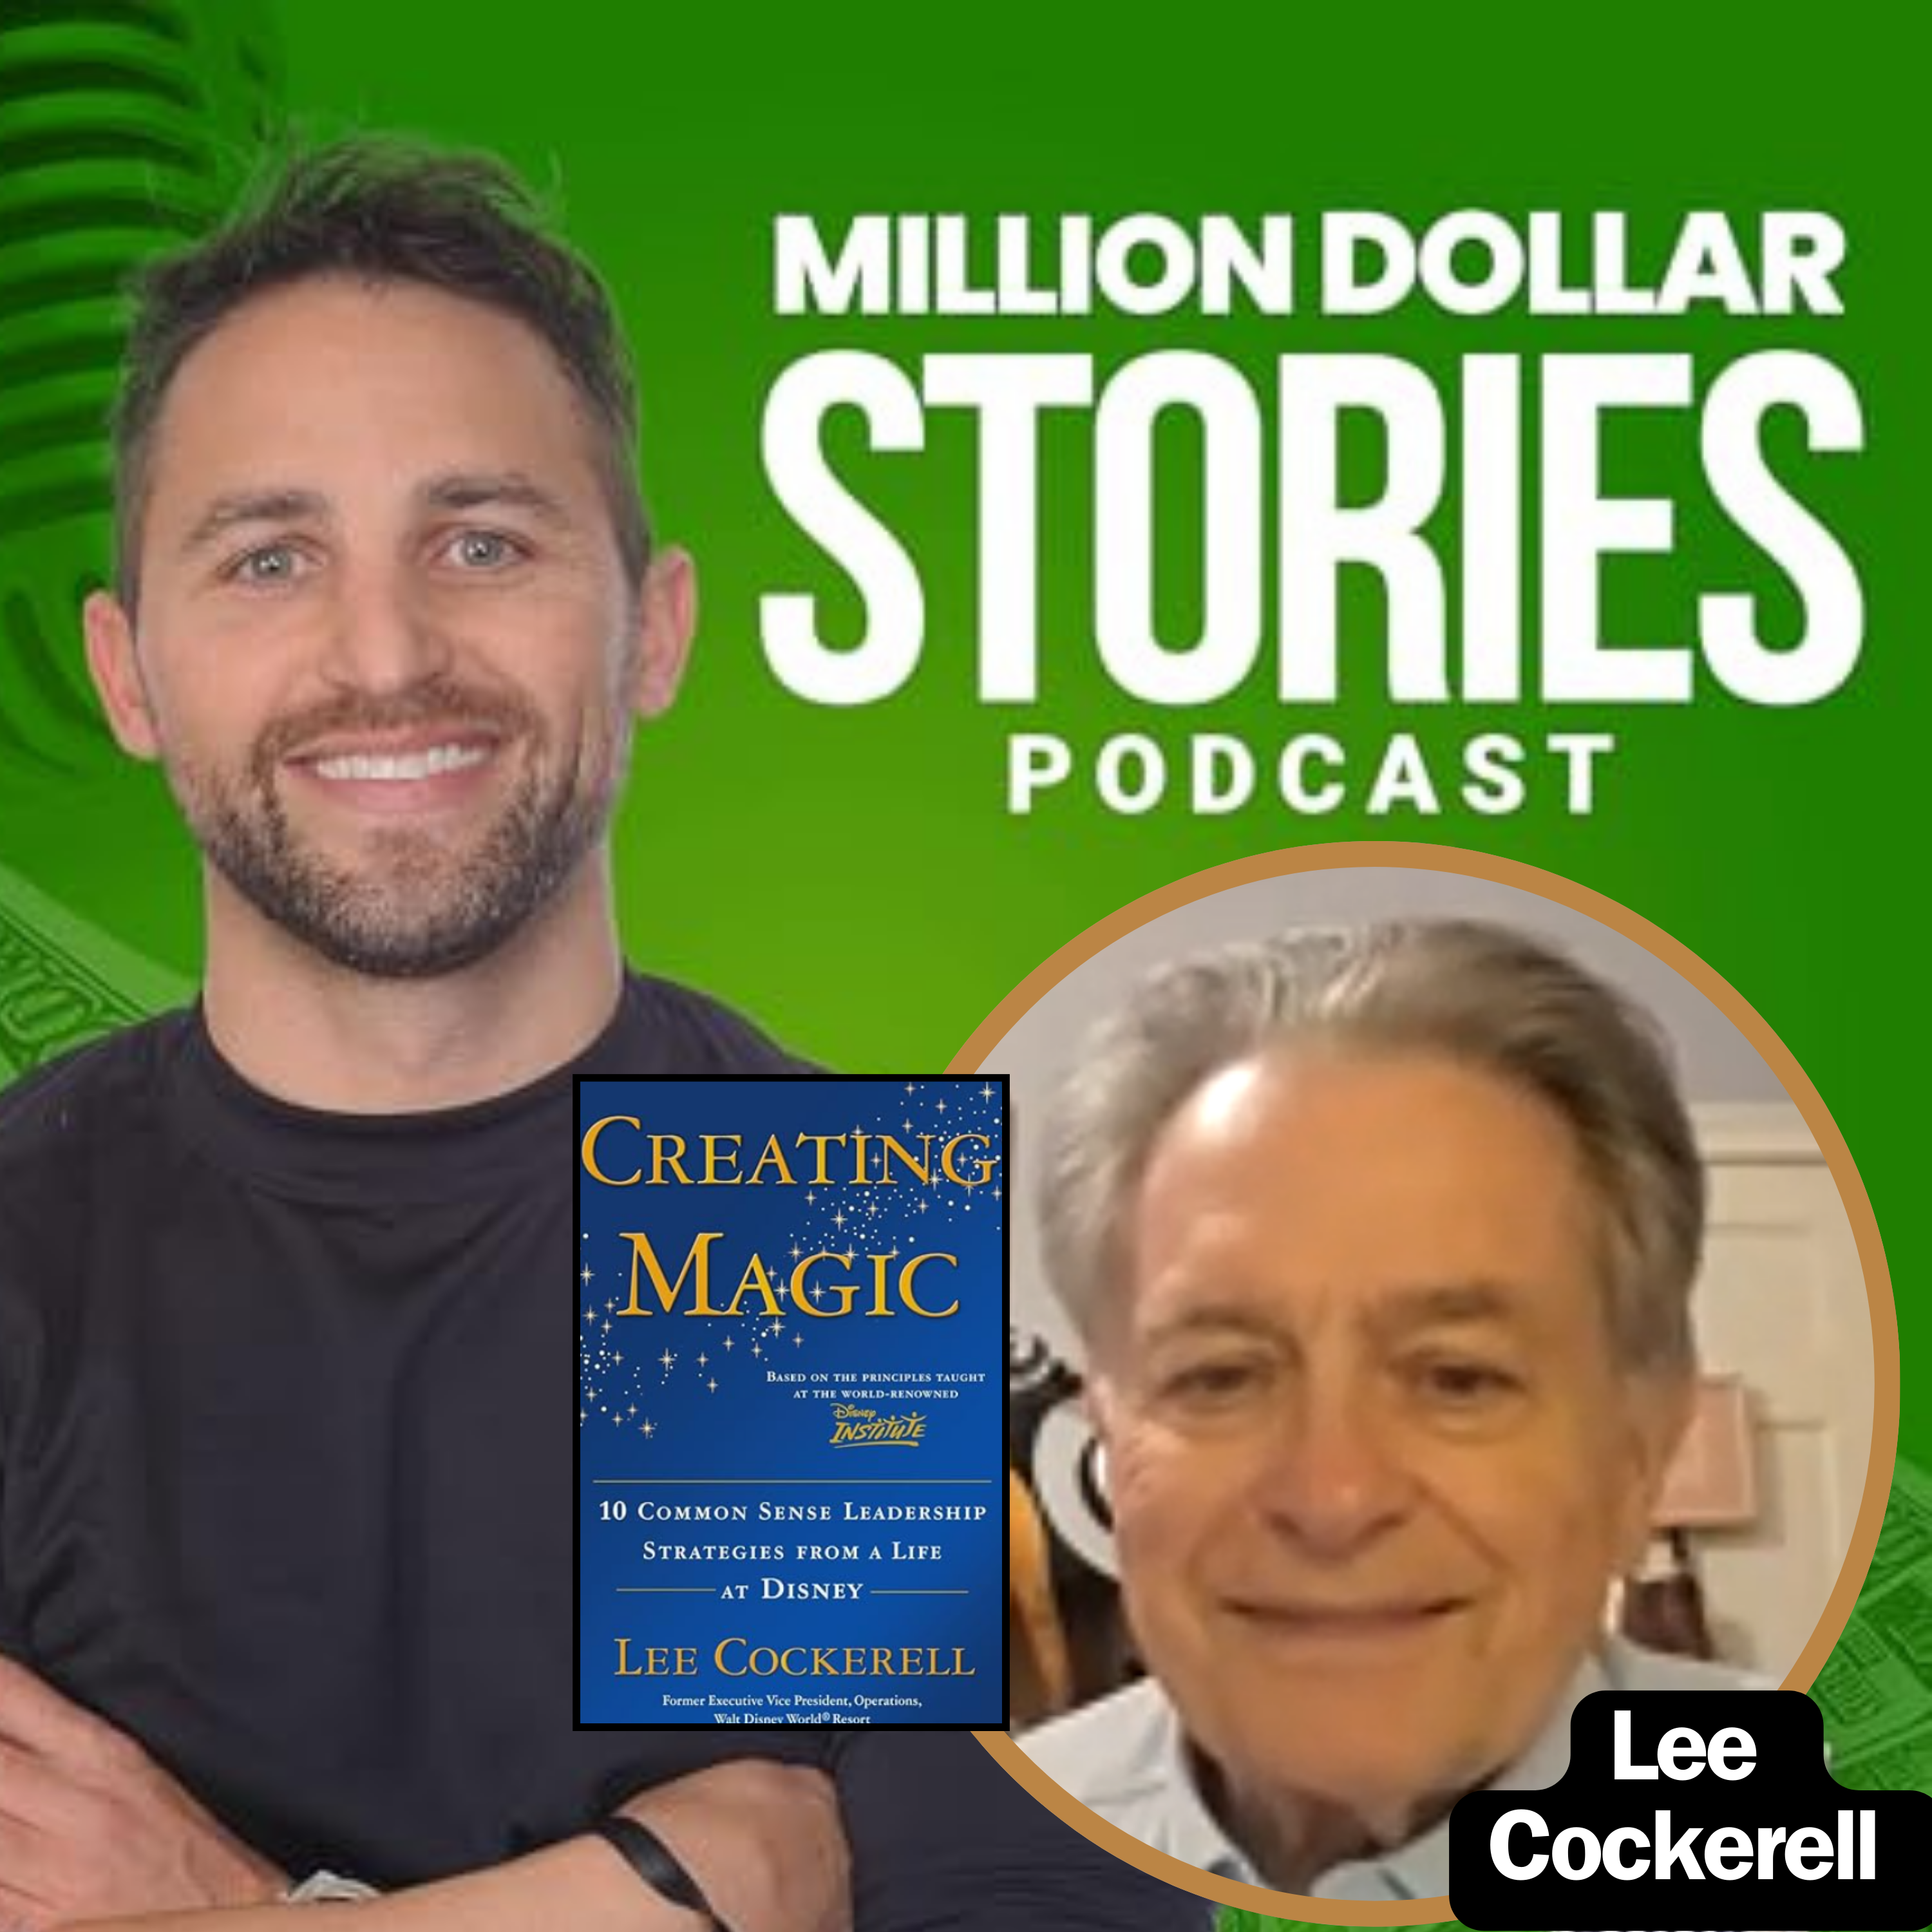 Lee Cockerell – Author of “Creating Magic: 10 Common Sense Leadership Strategies from a Life at Disney”